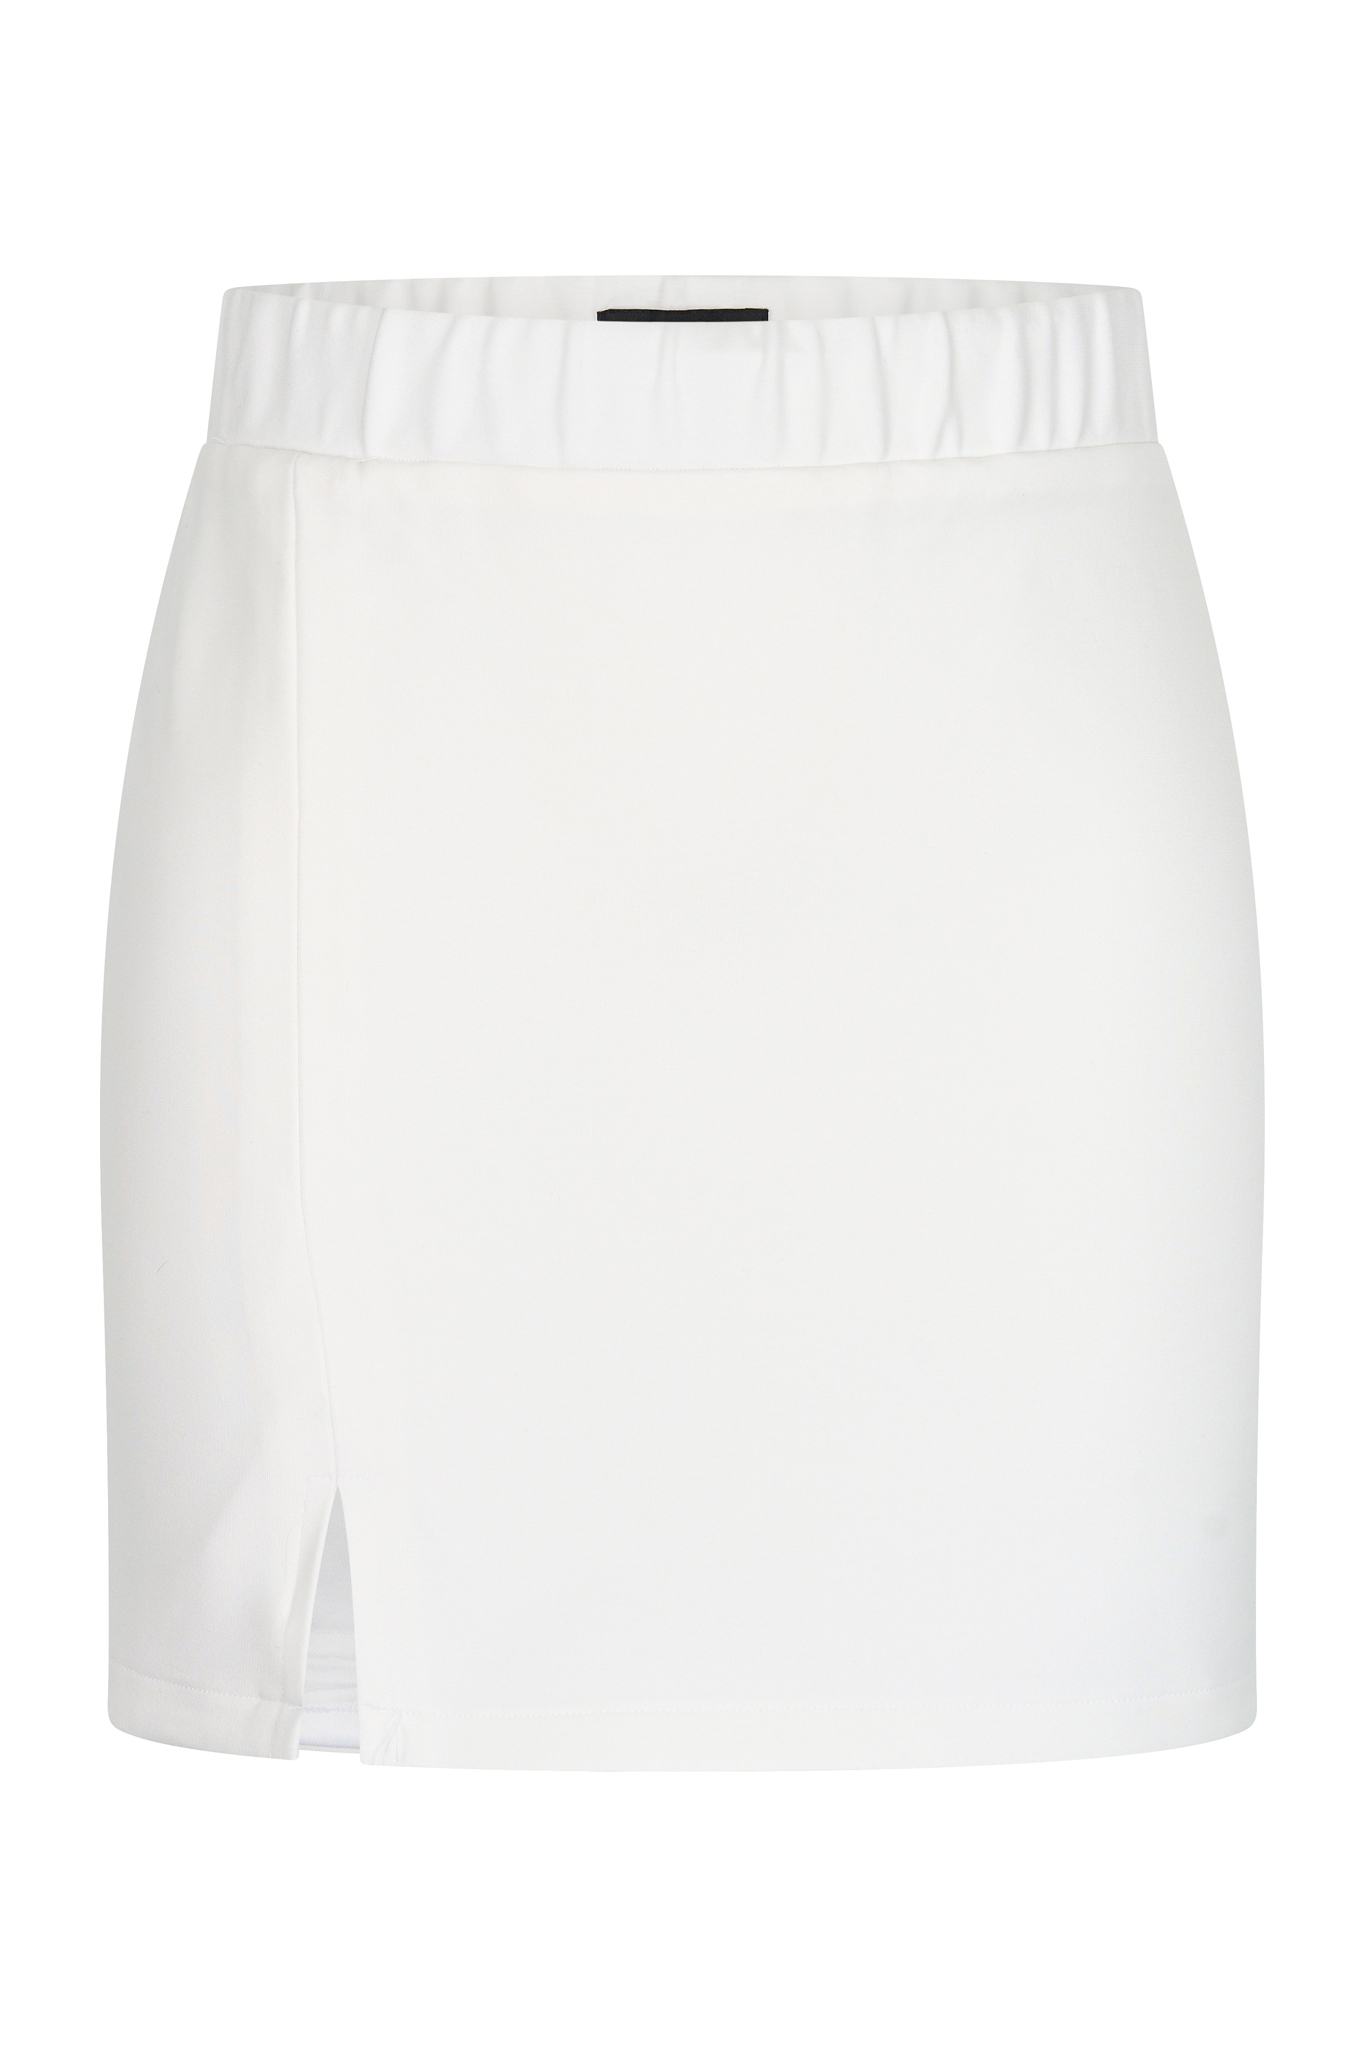 Skirt white ladies